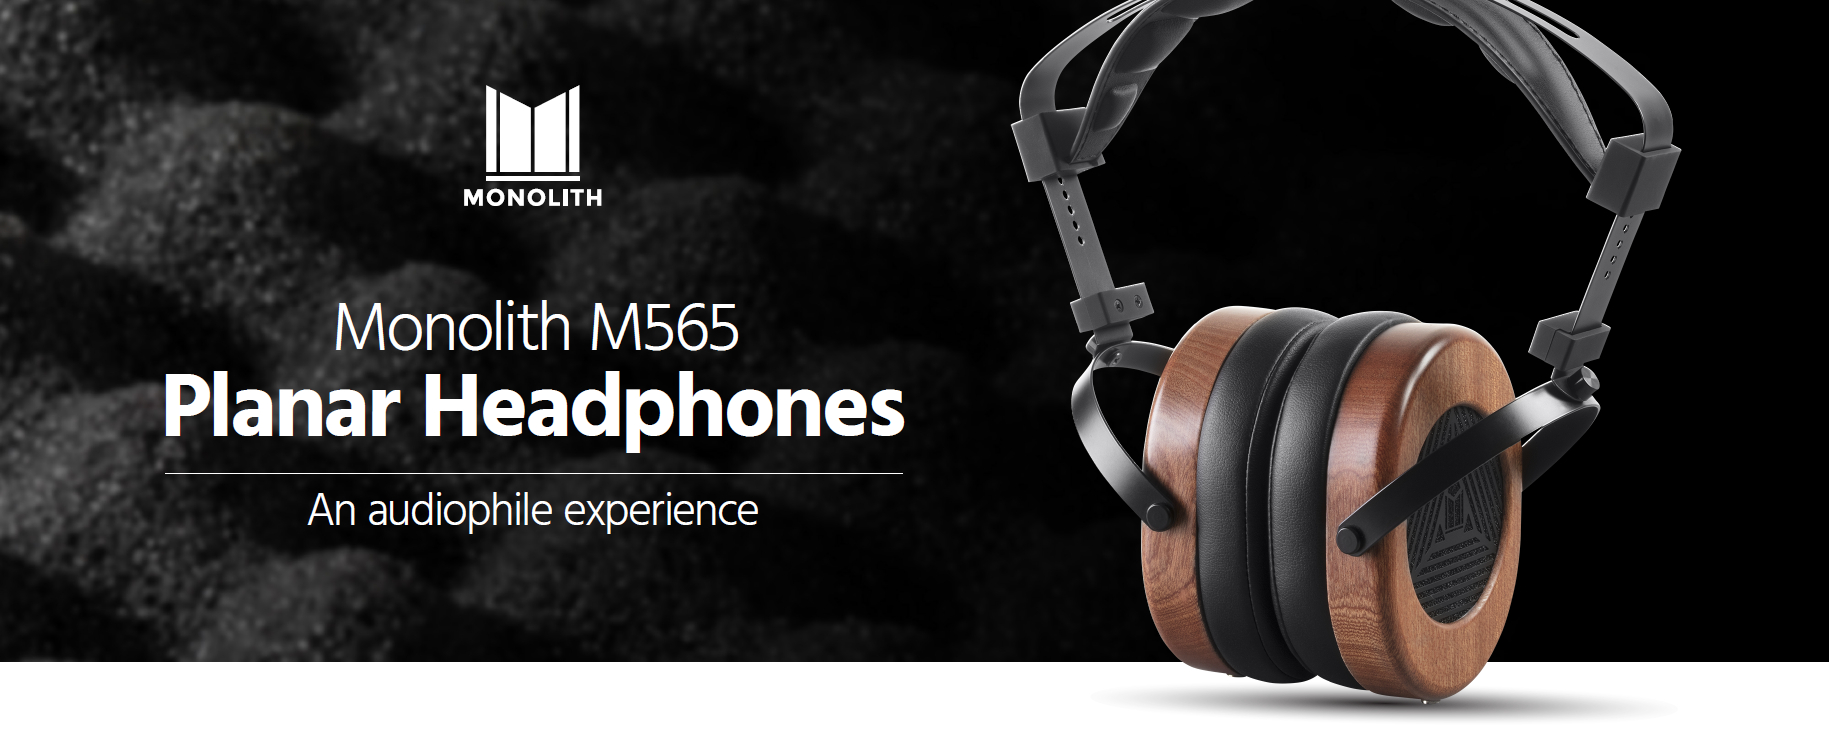 M565 Planar Headphones